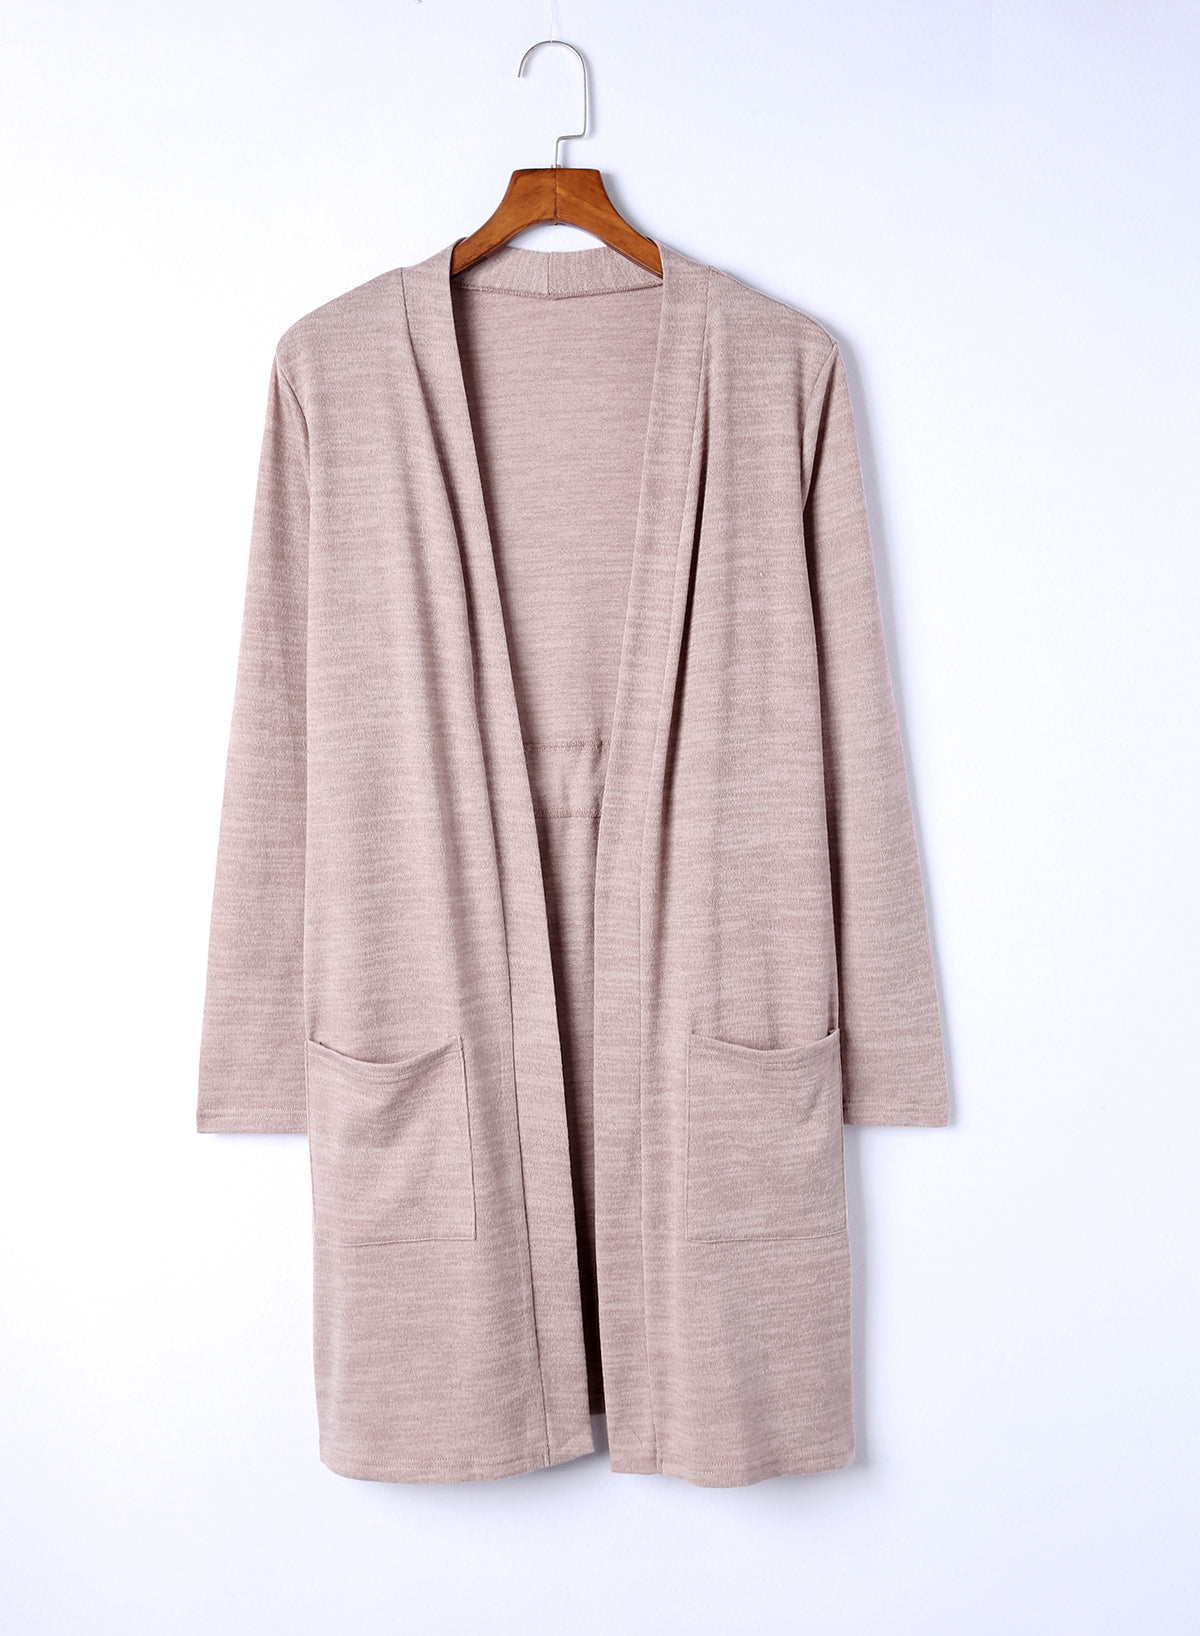 Long Sleeve Open Front Cardigan with Pocket - TiffanyzKlozet